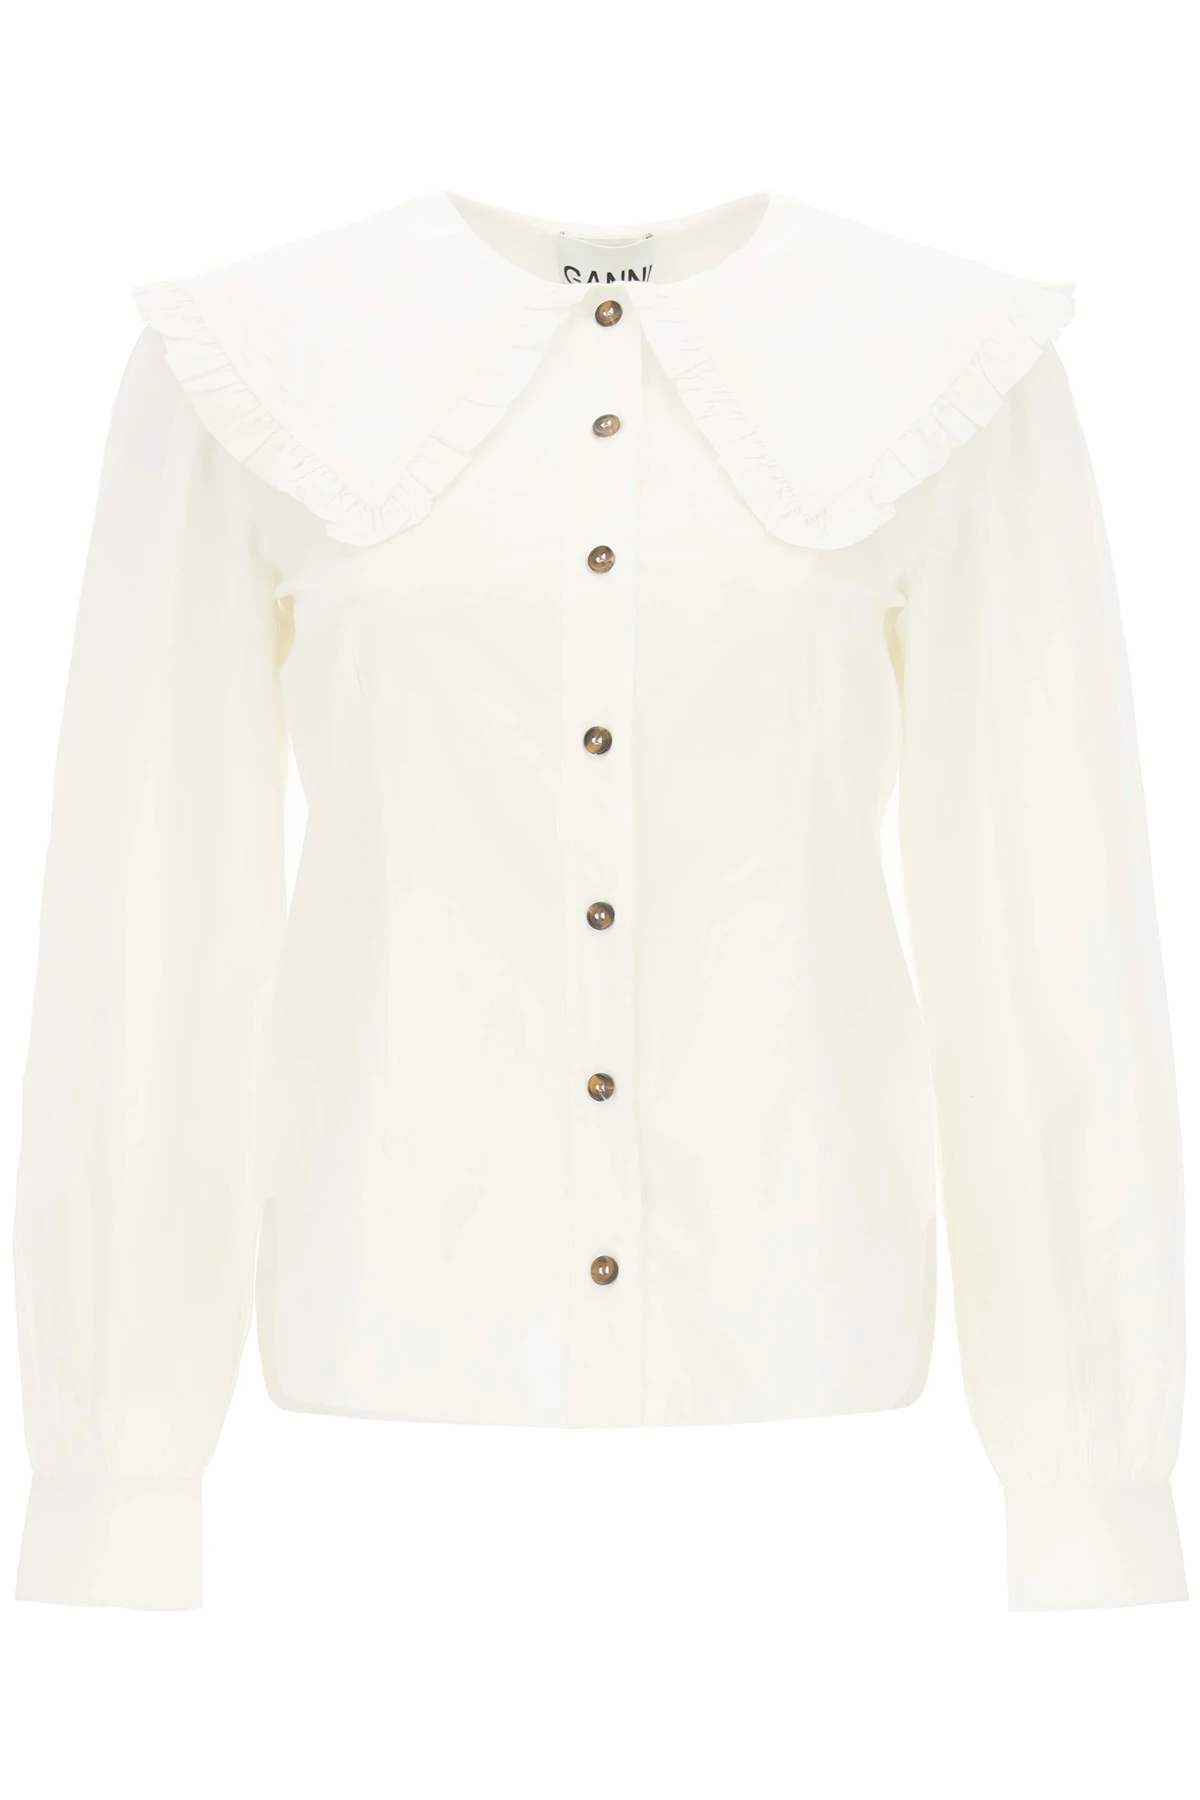 GANNI 白色女士衬衫 F5500-151 商品